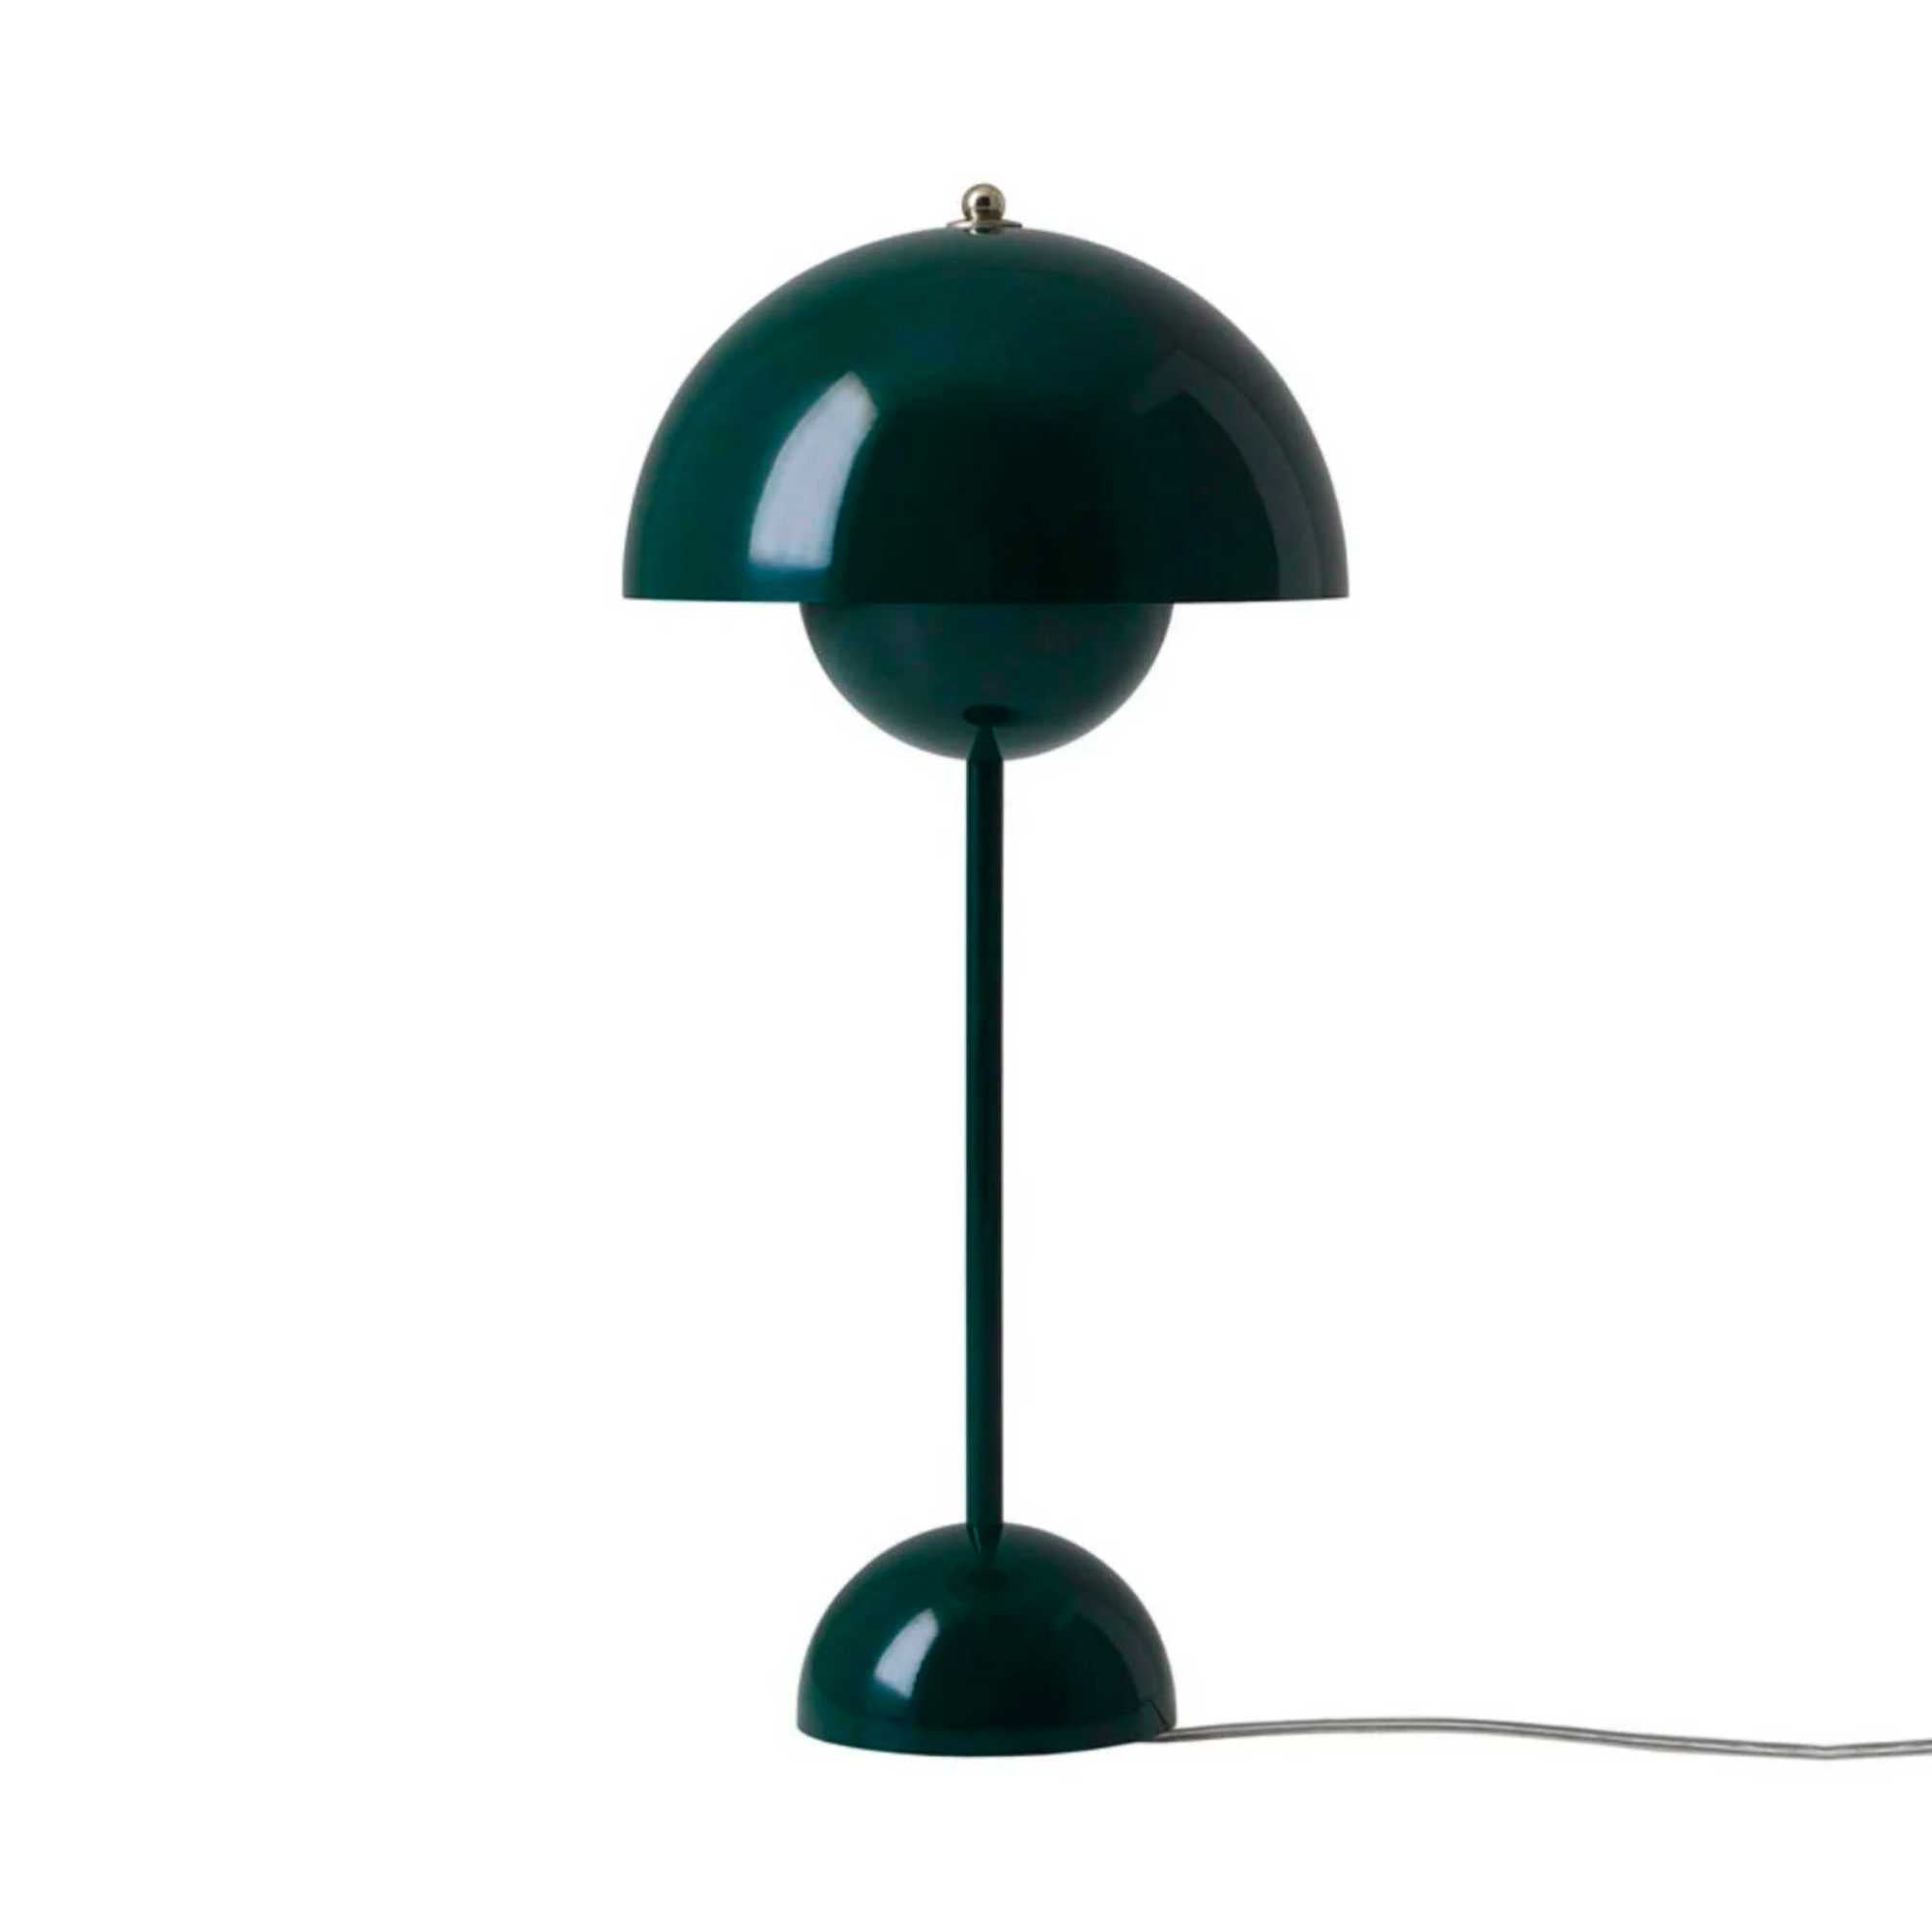 &Tradition VP3 Flowerpot Table Lamp, dark green